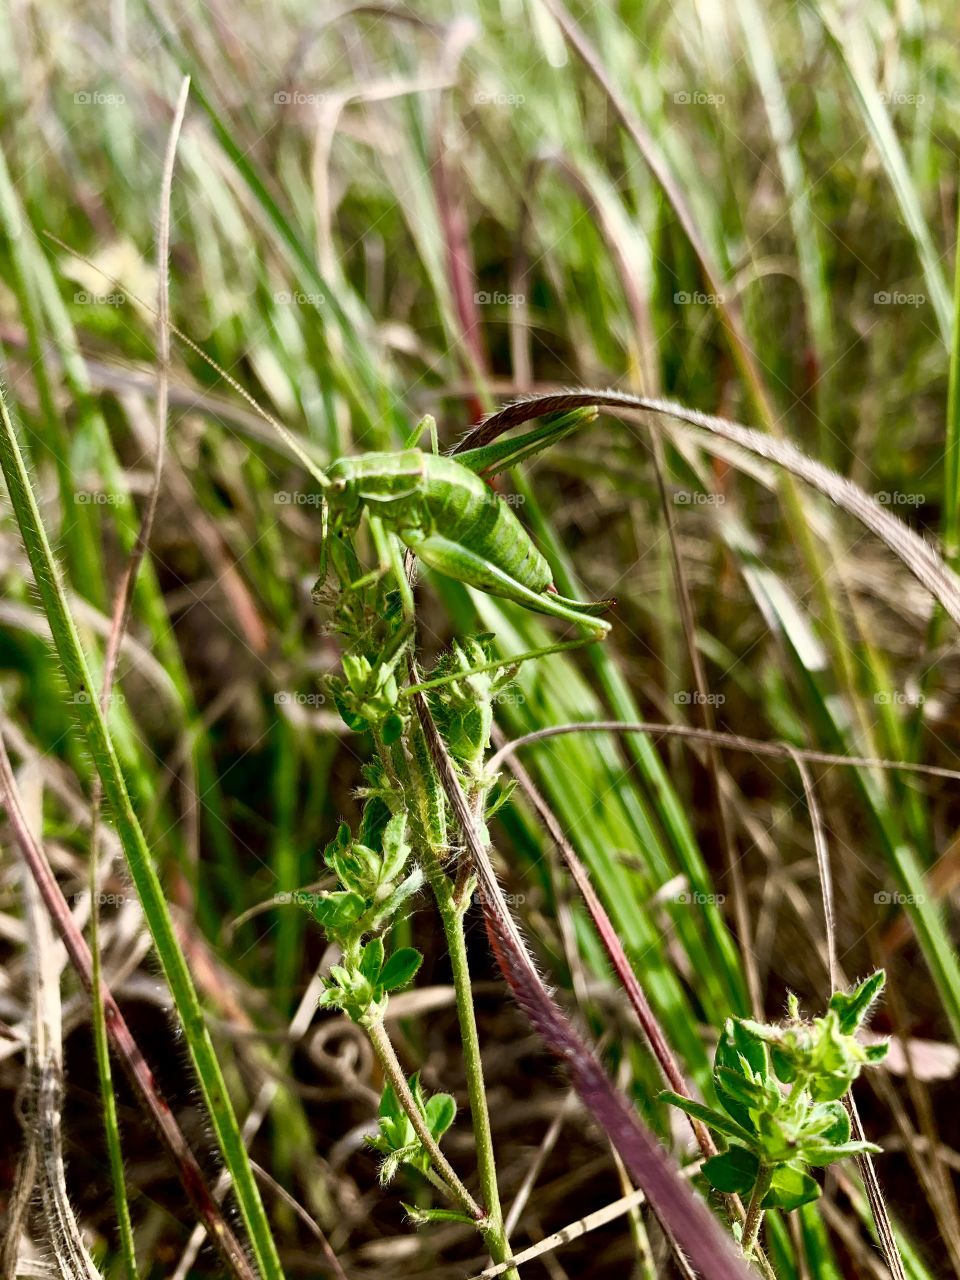 grasshopper in the grass